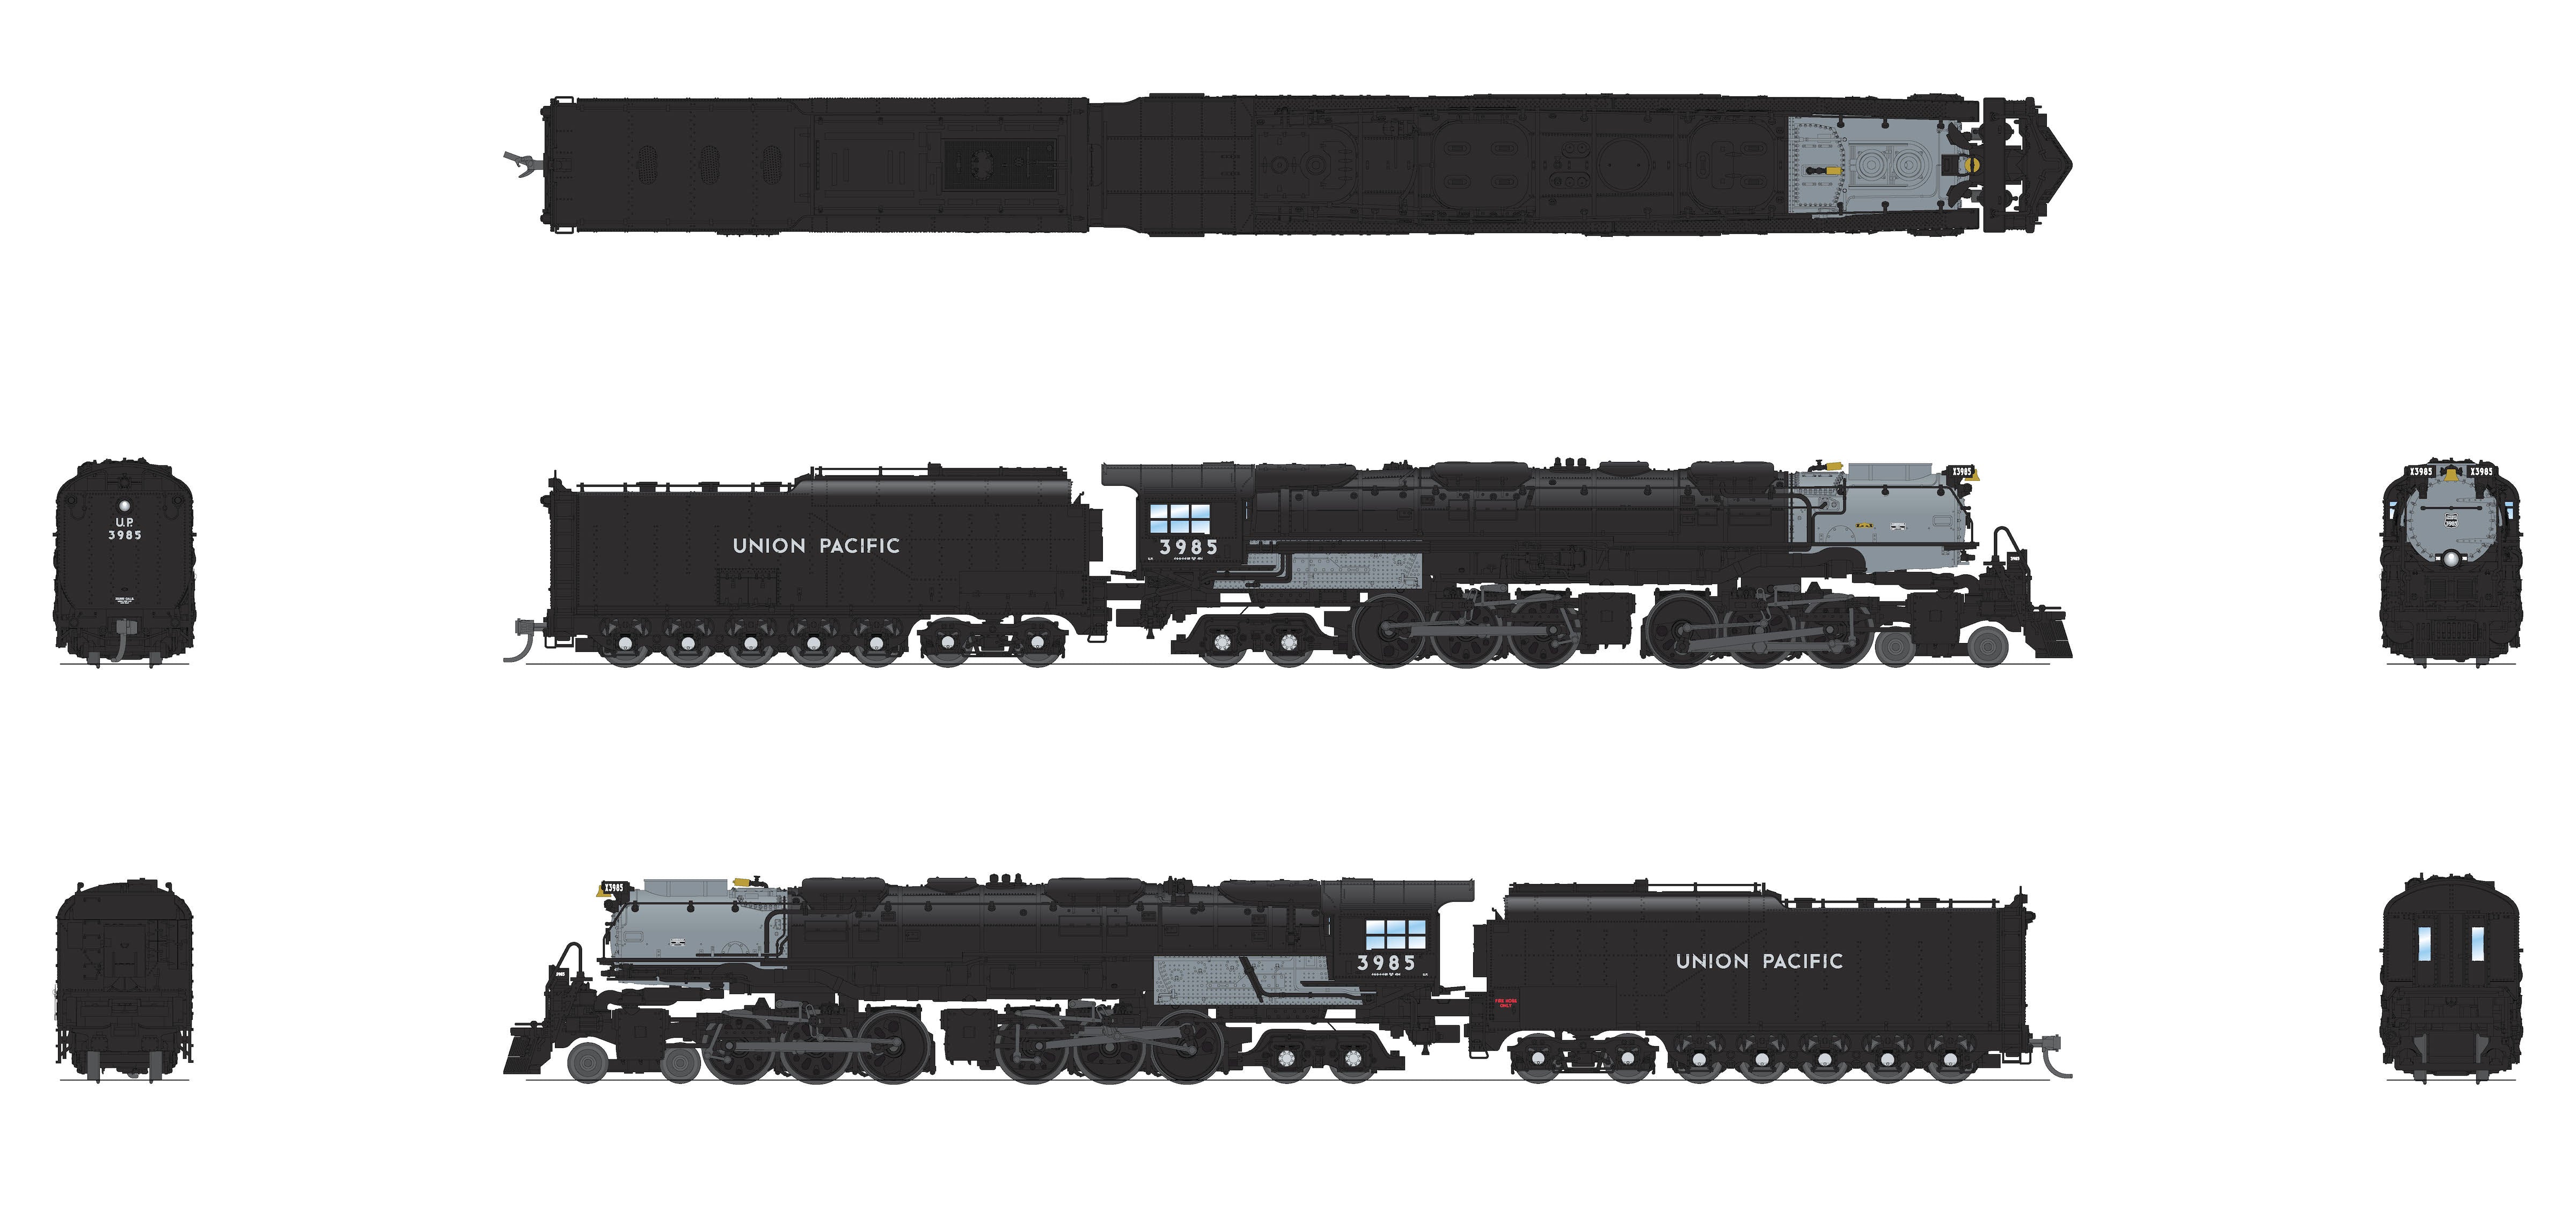 6986 UP Challenger 4-6-6-4, #3985 Excursion Locomotive, Oil Tender, Black & Graphite, Paragon4 Sound/DC/DCC, Smoke, N